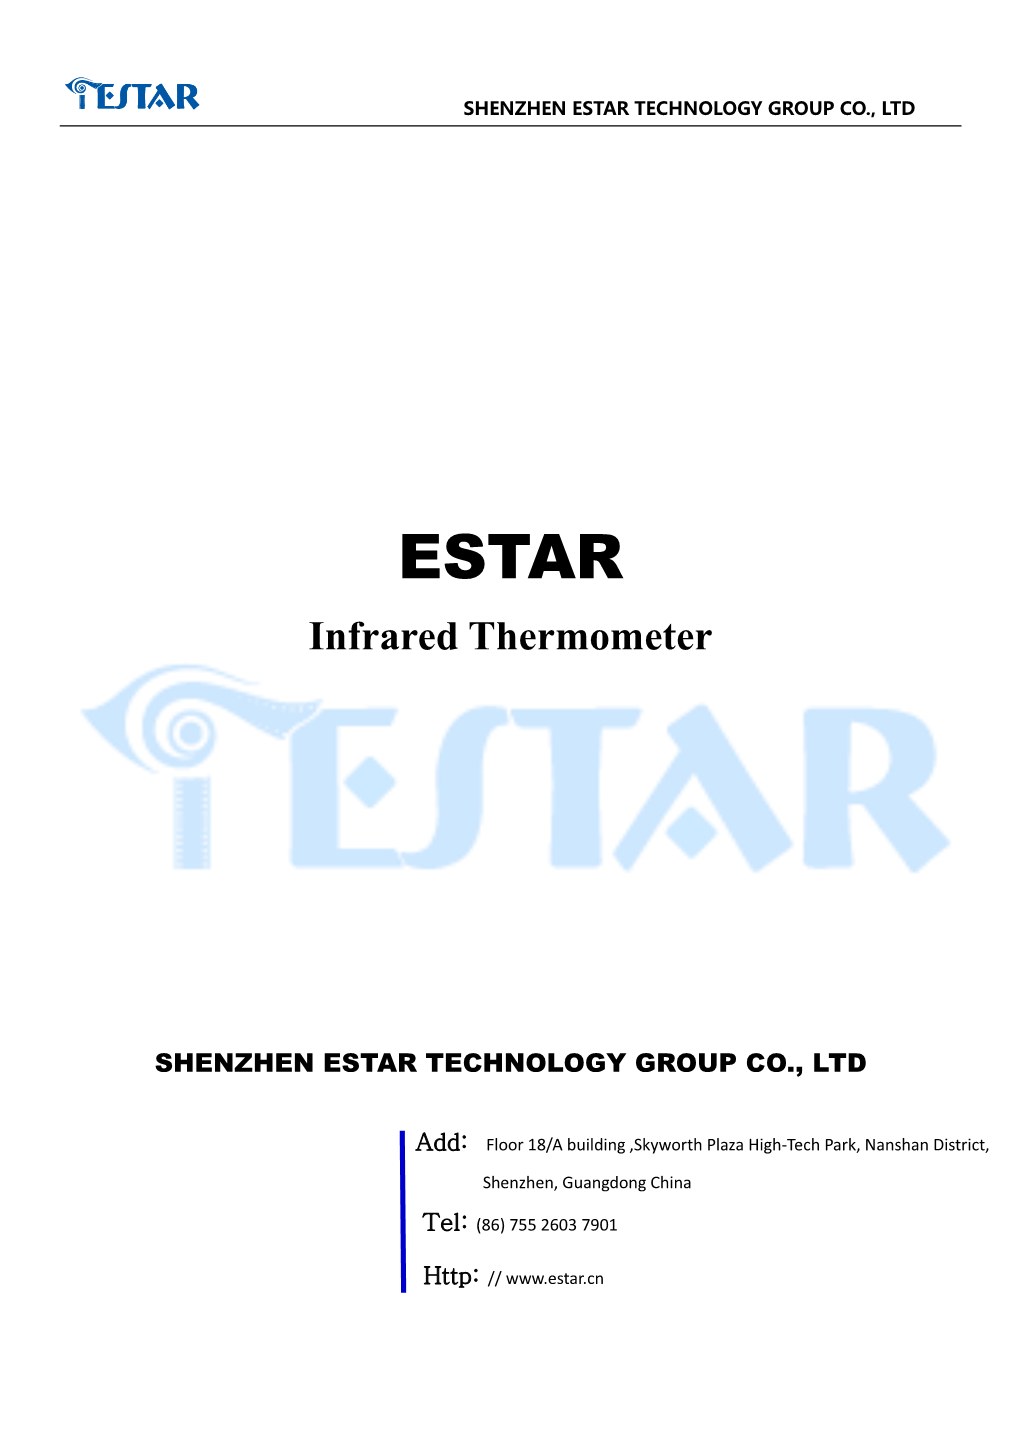 Estar Technology Group Co., Ltd